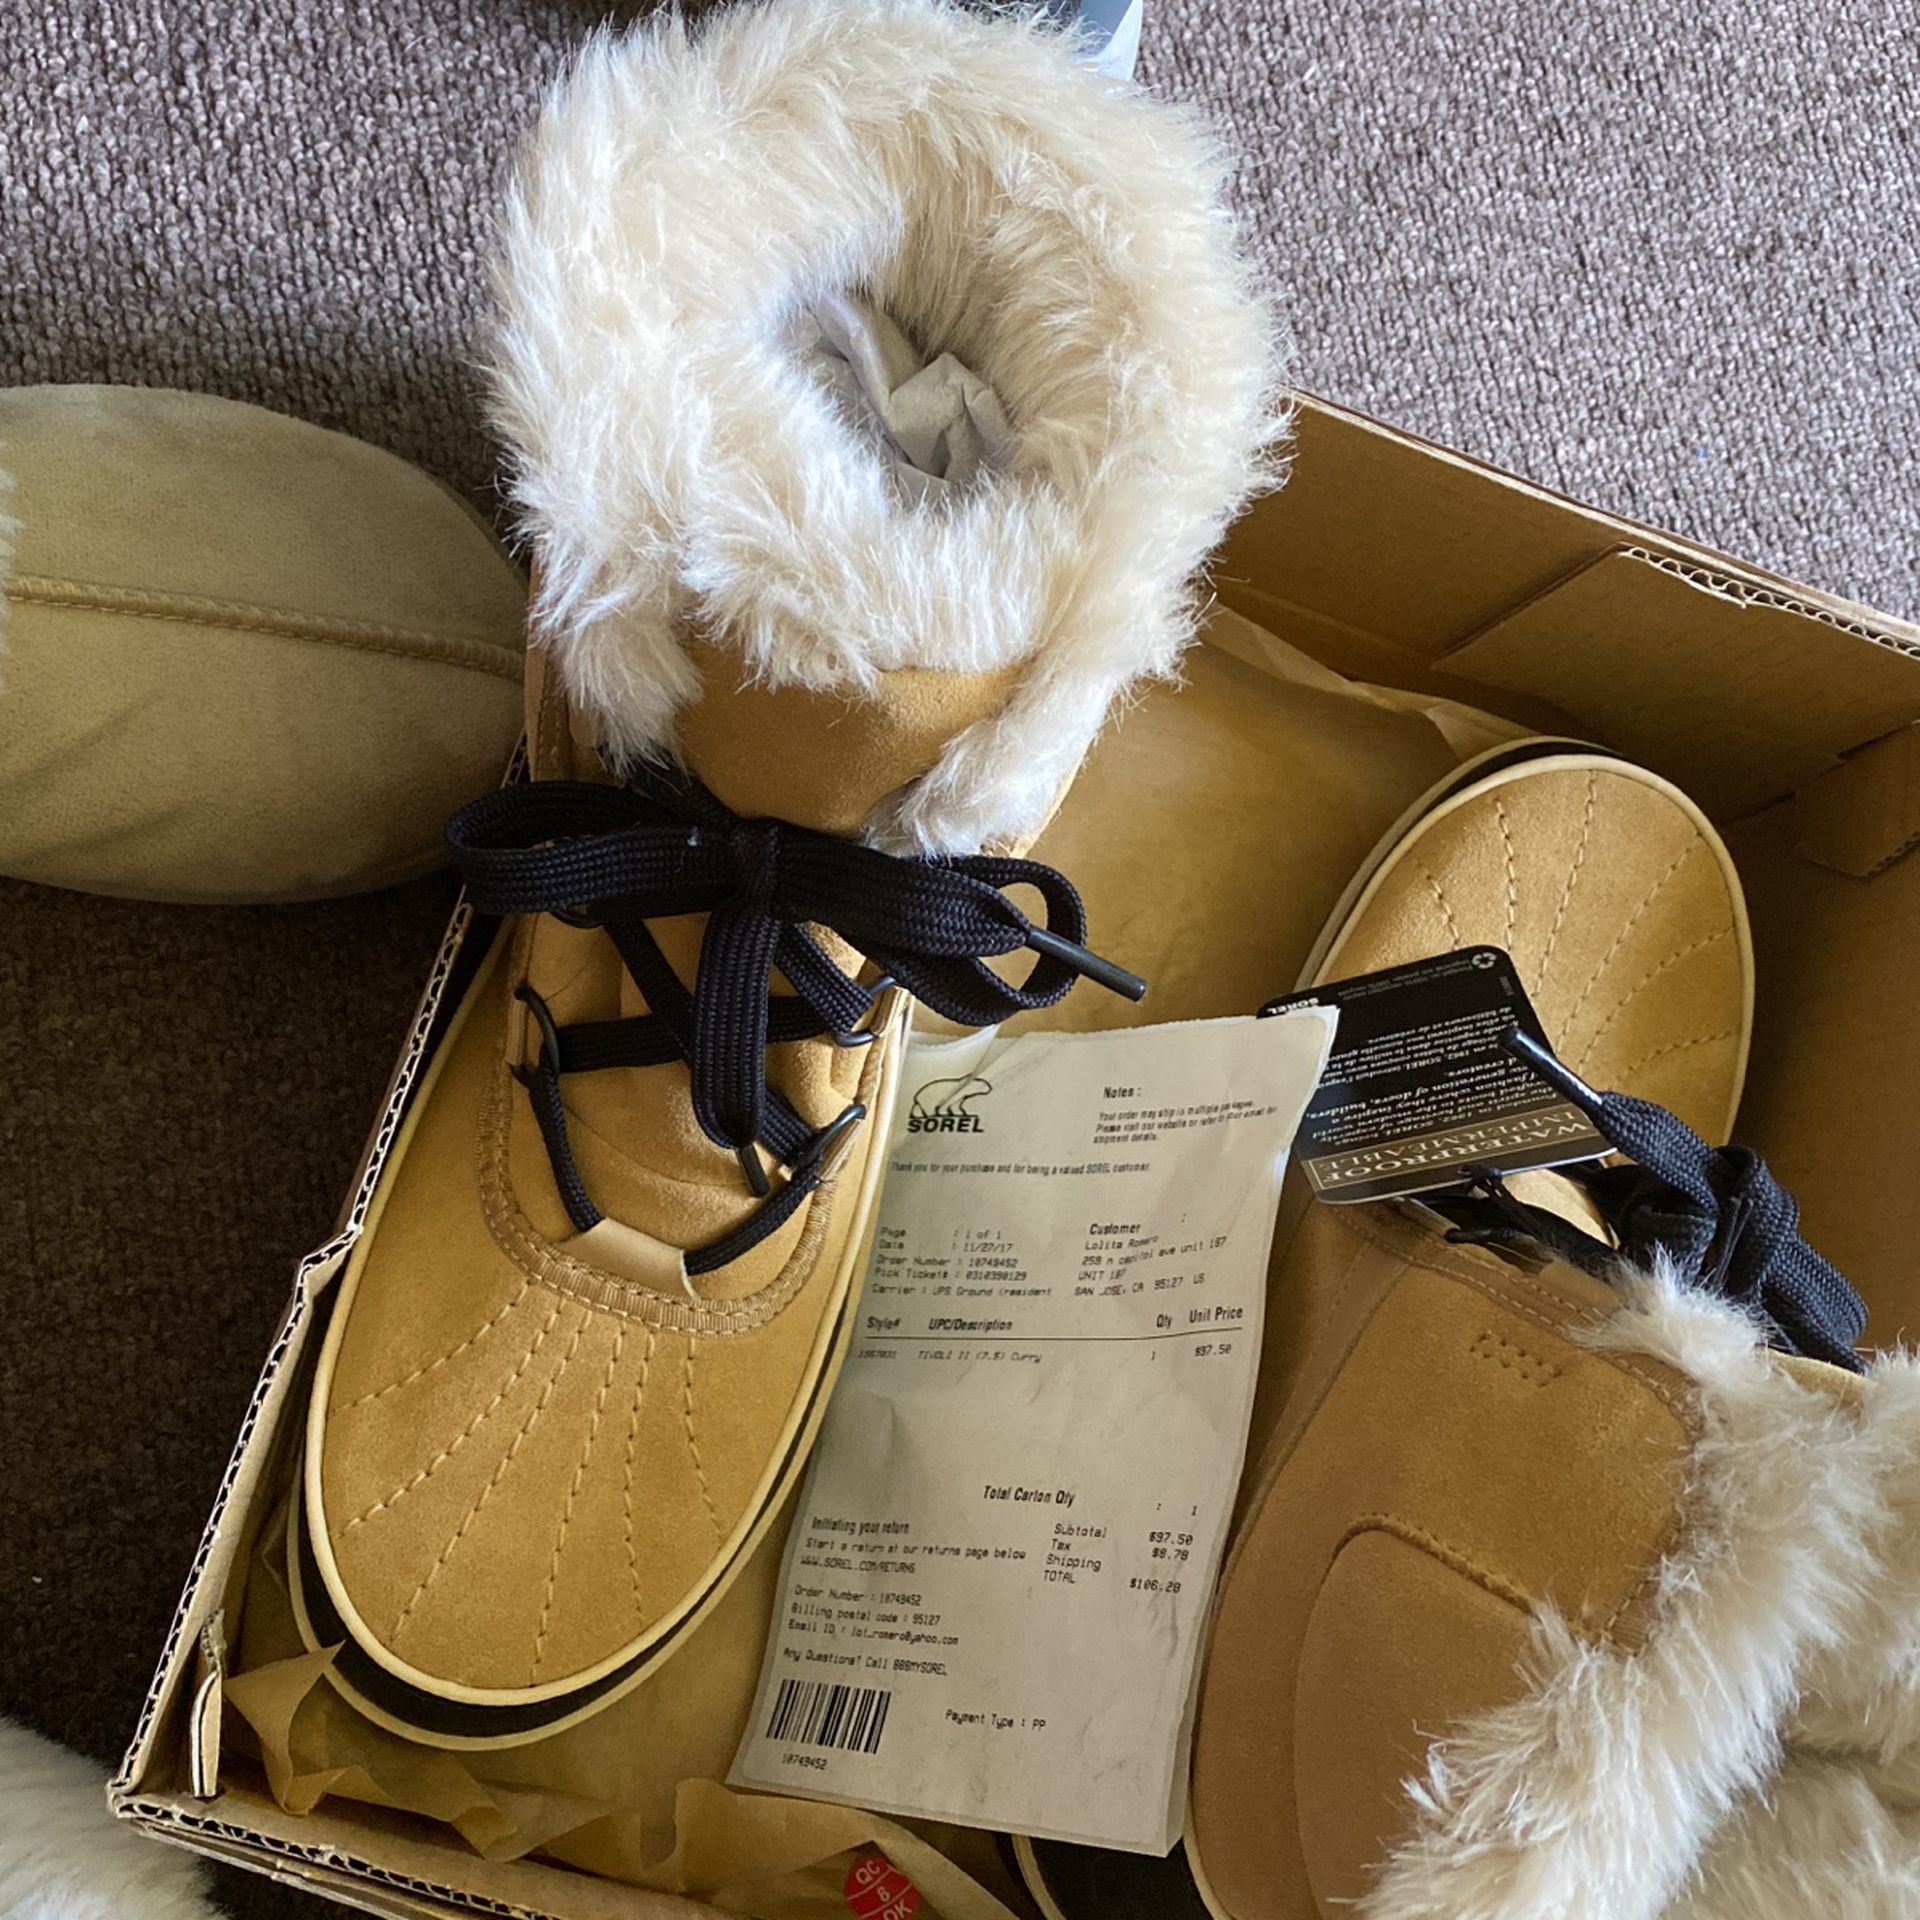 Sorel Brand New Snow Boots Size 7.5